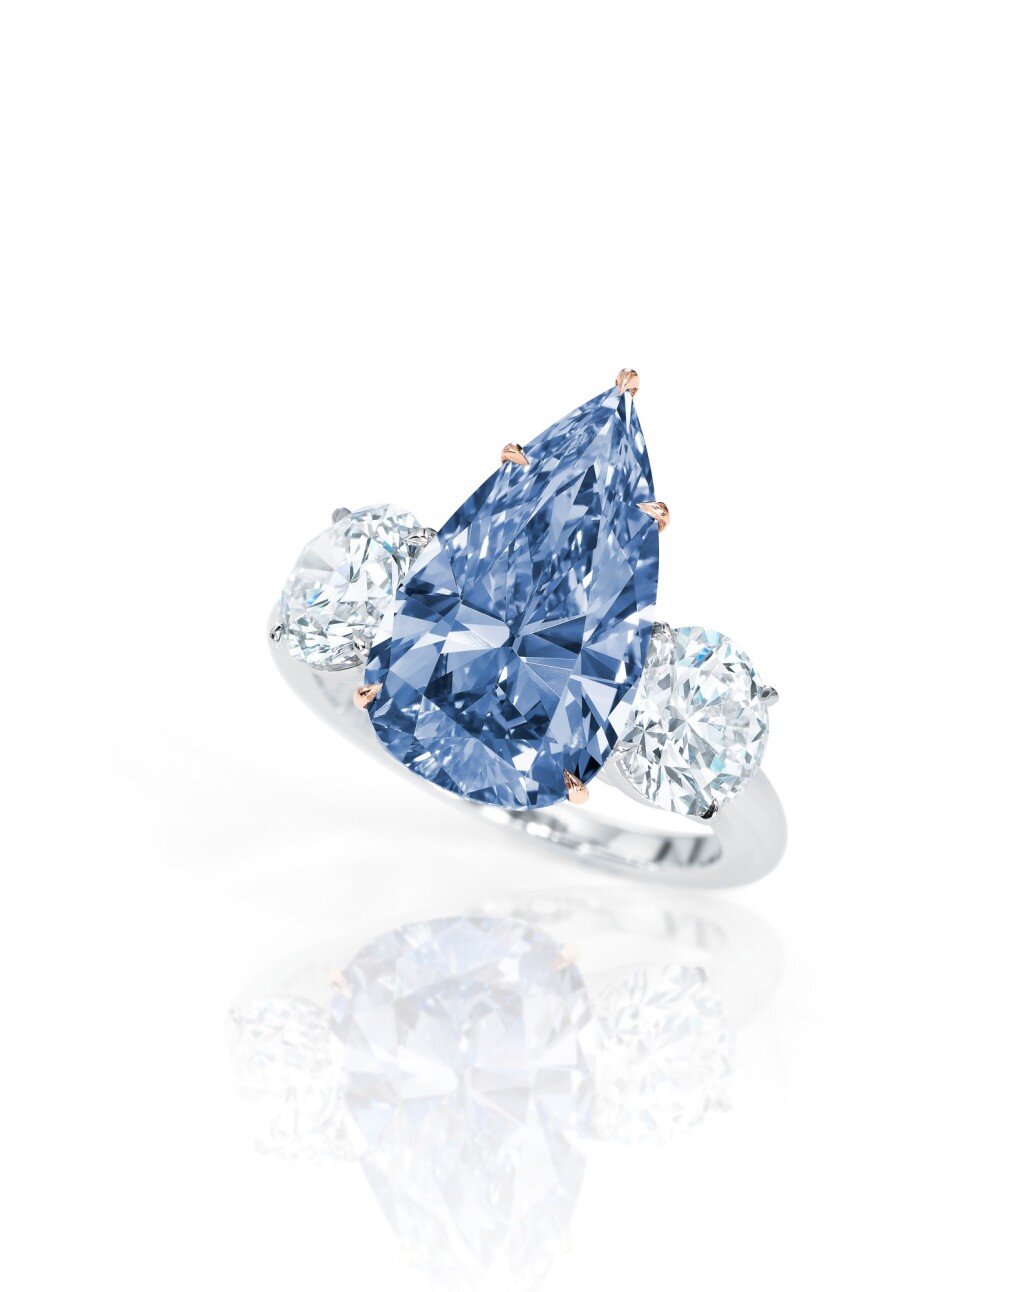 4.48 Carat, Fancy Vivid Blue, Internally Flawless, Pear Shaped Diamond. Image courtesy of Sotheby's 